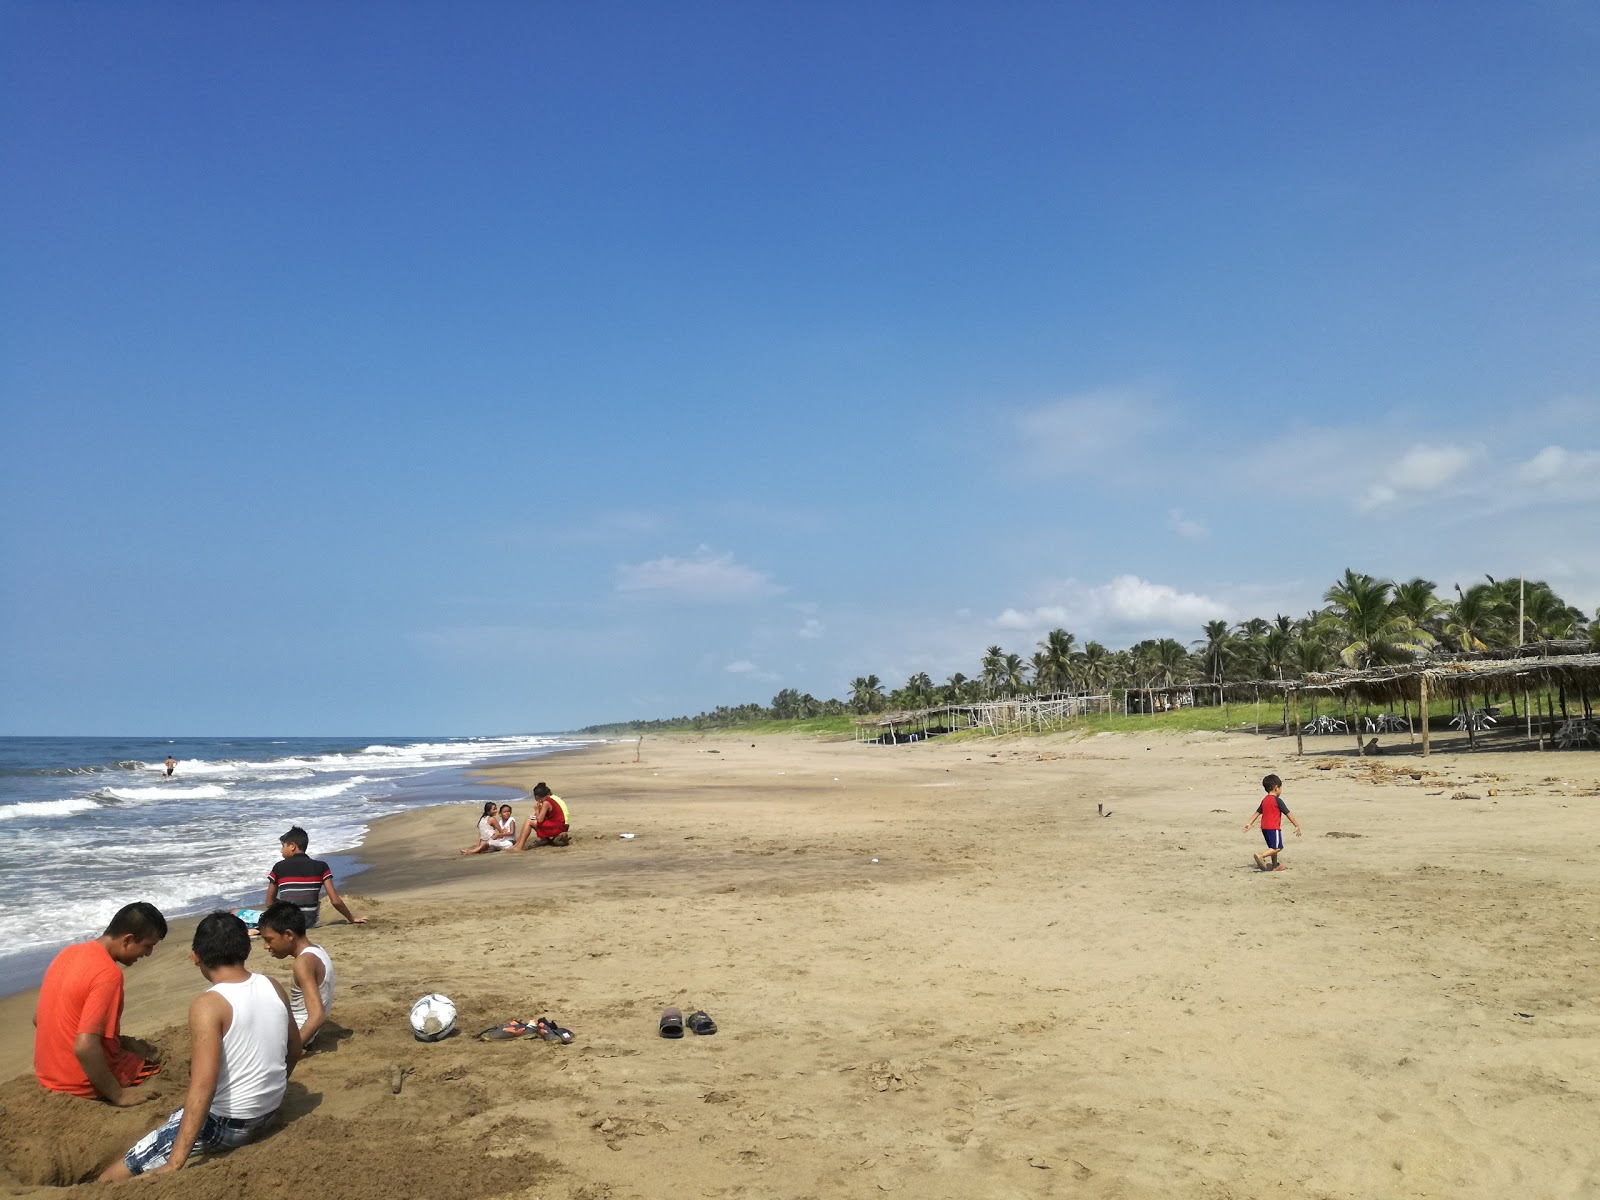 Foto von Playa Las Palmitas mit langer gerader strand